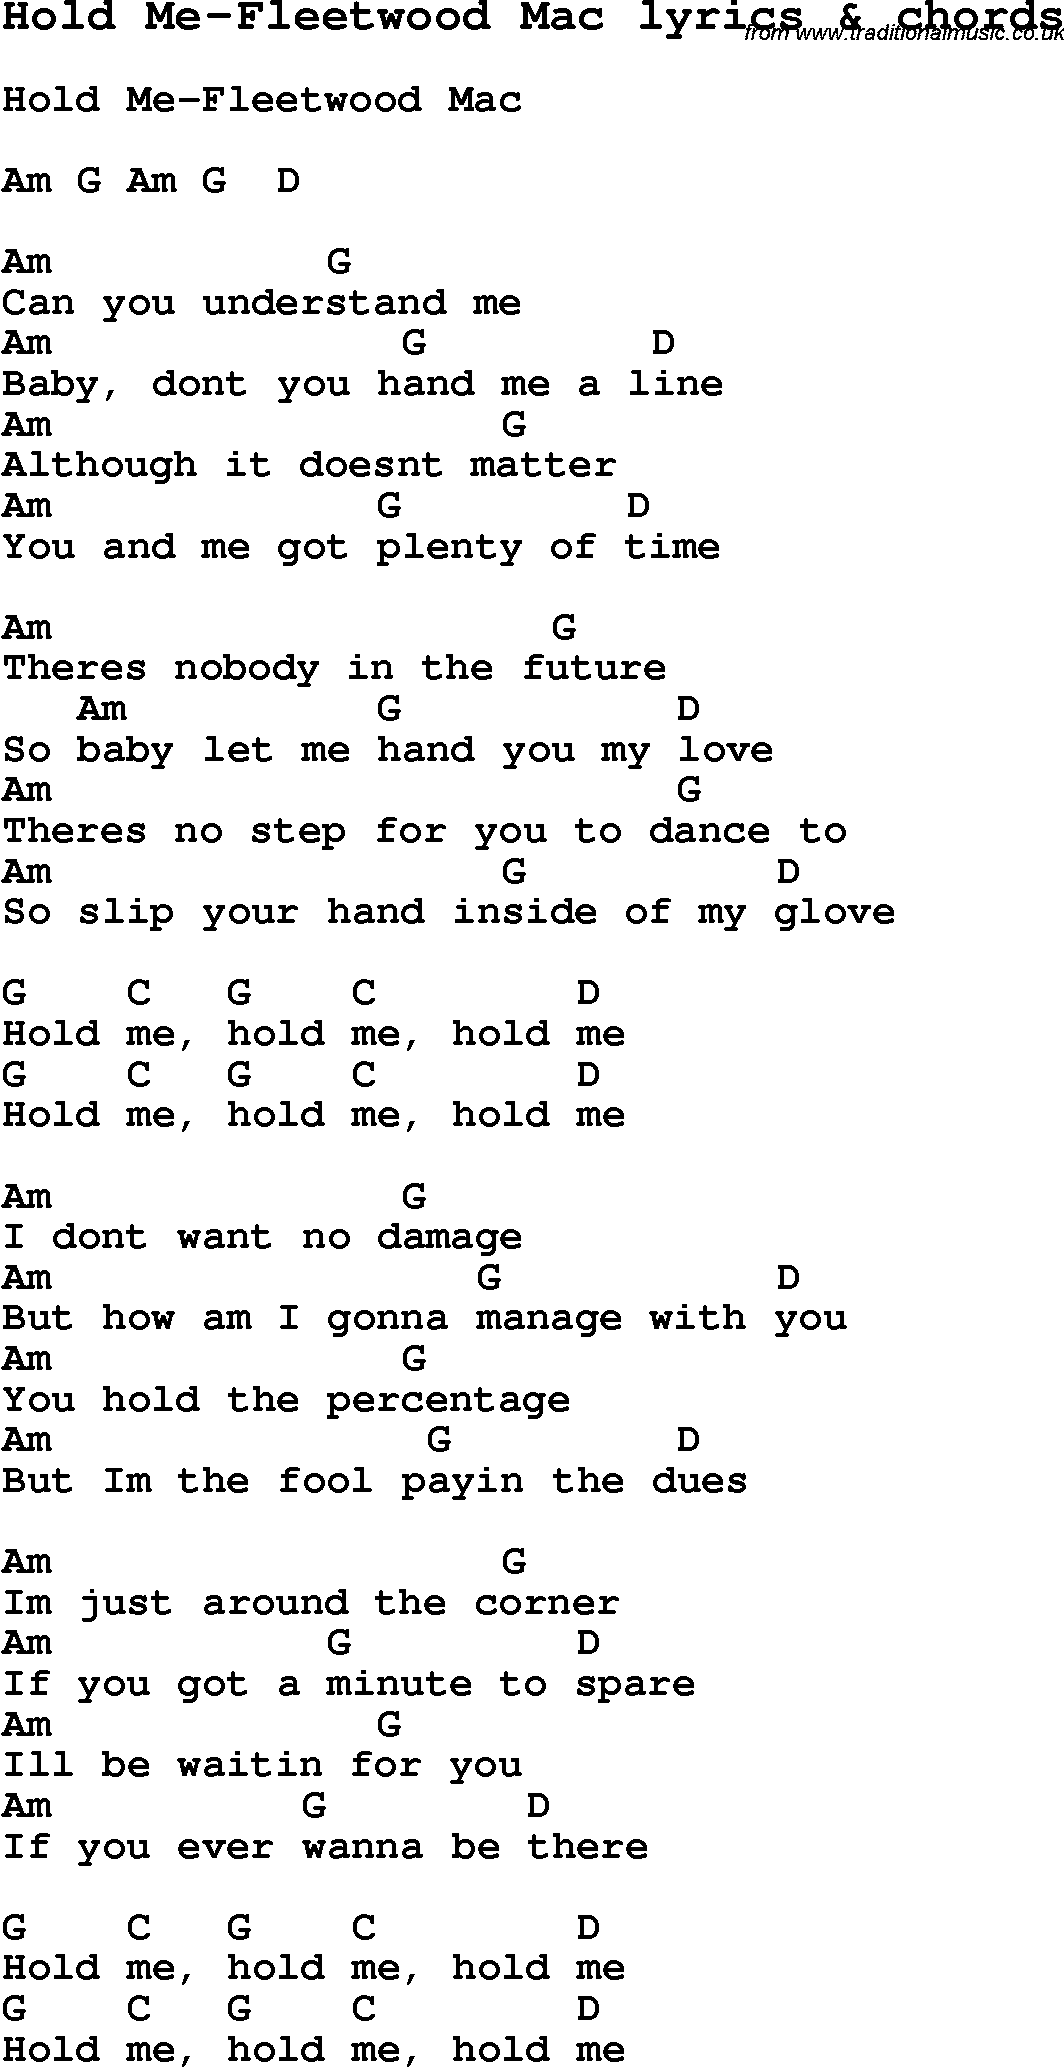 Love Song Lyrics for: Hold Me-Fleetwood Mac with chords for Ukulele, Guitar Banjo etc.